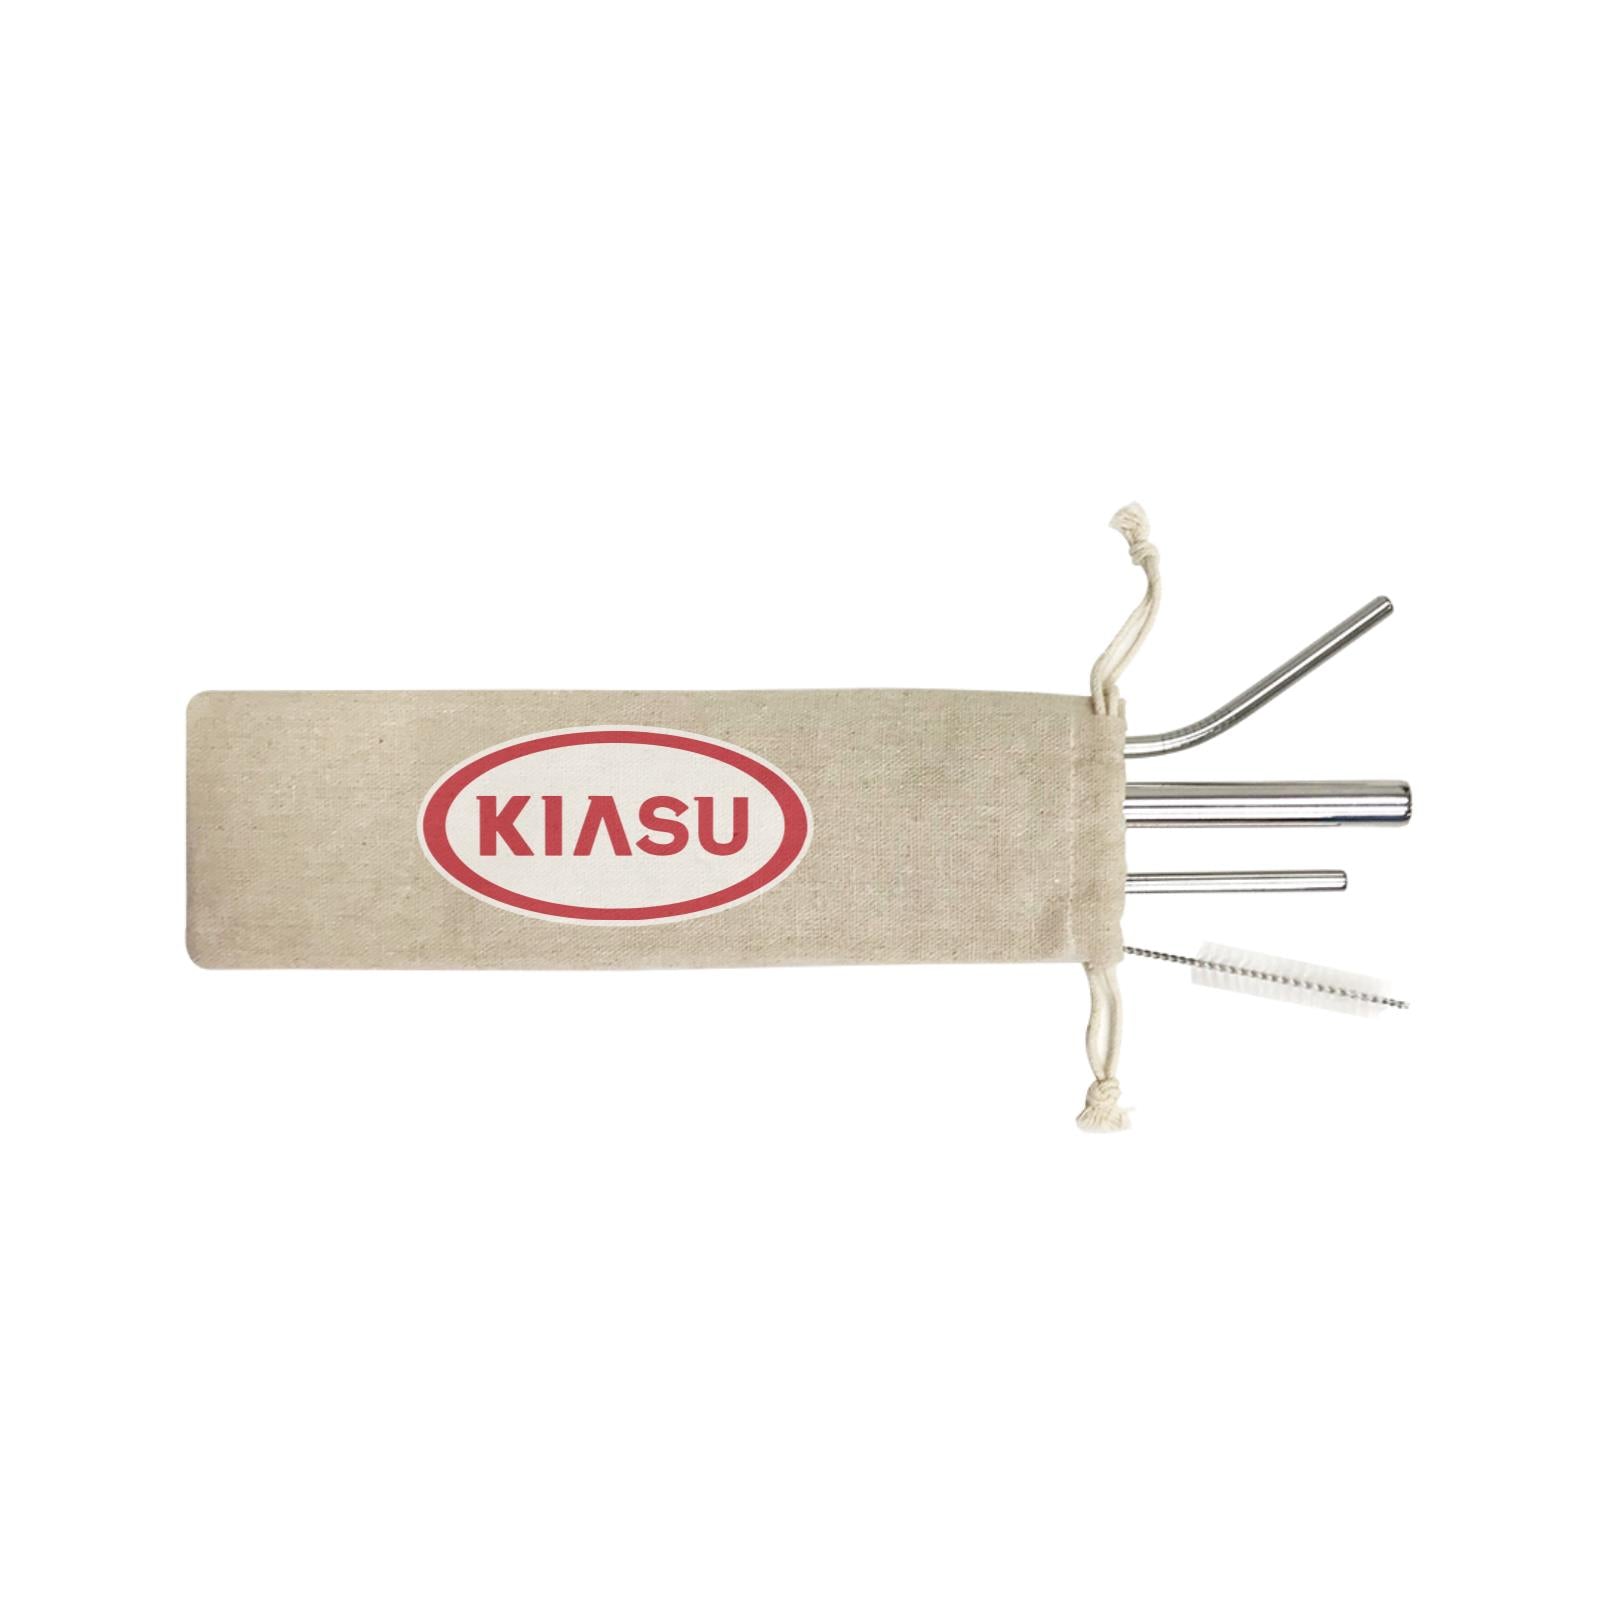 Slang Statement Kiasu 4-in-1 Stainless Steel Straw Set In a Satchel